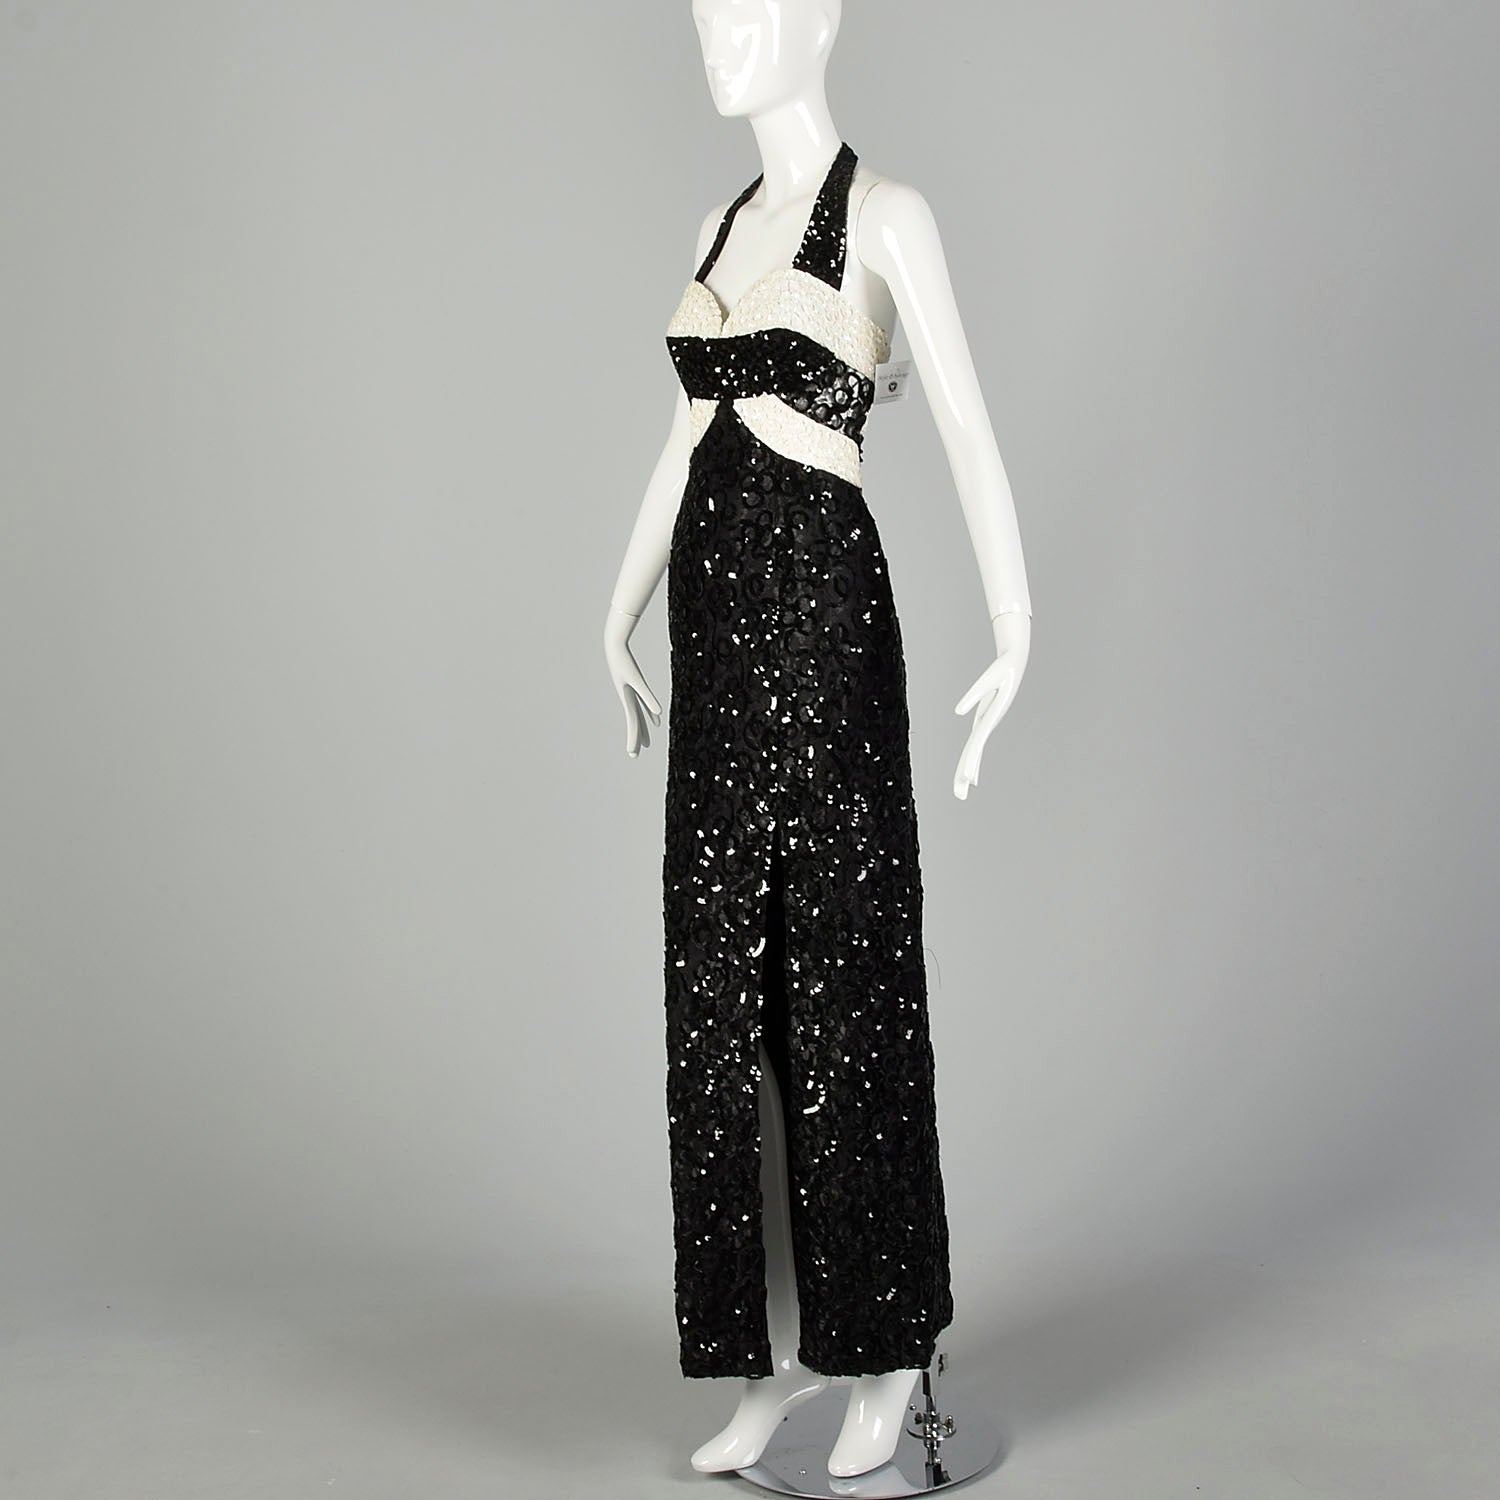 Medium Mike Benet Black Halter Dress Formal Evening Gown